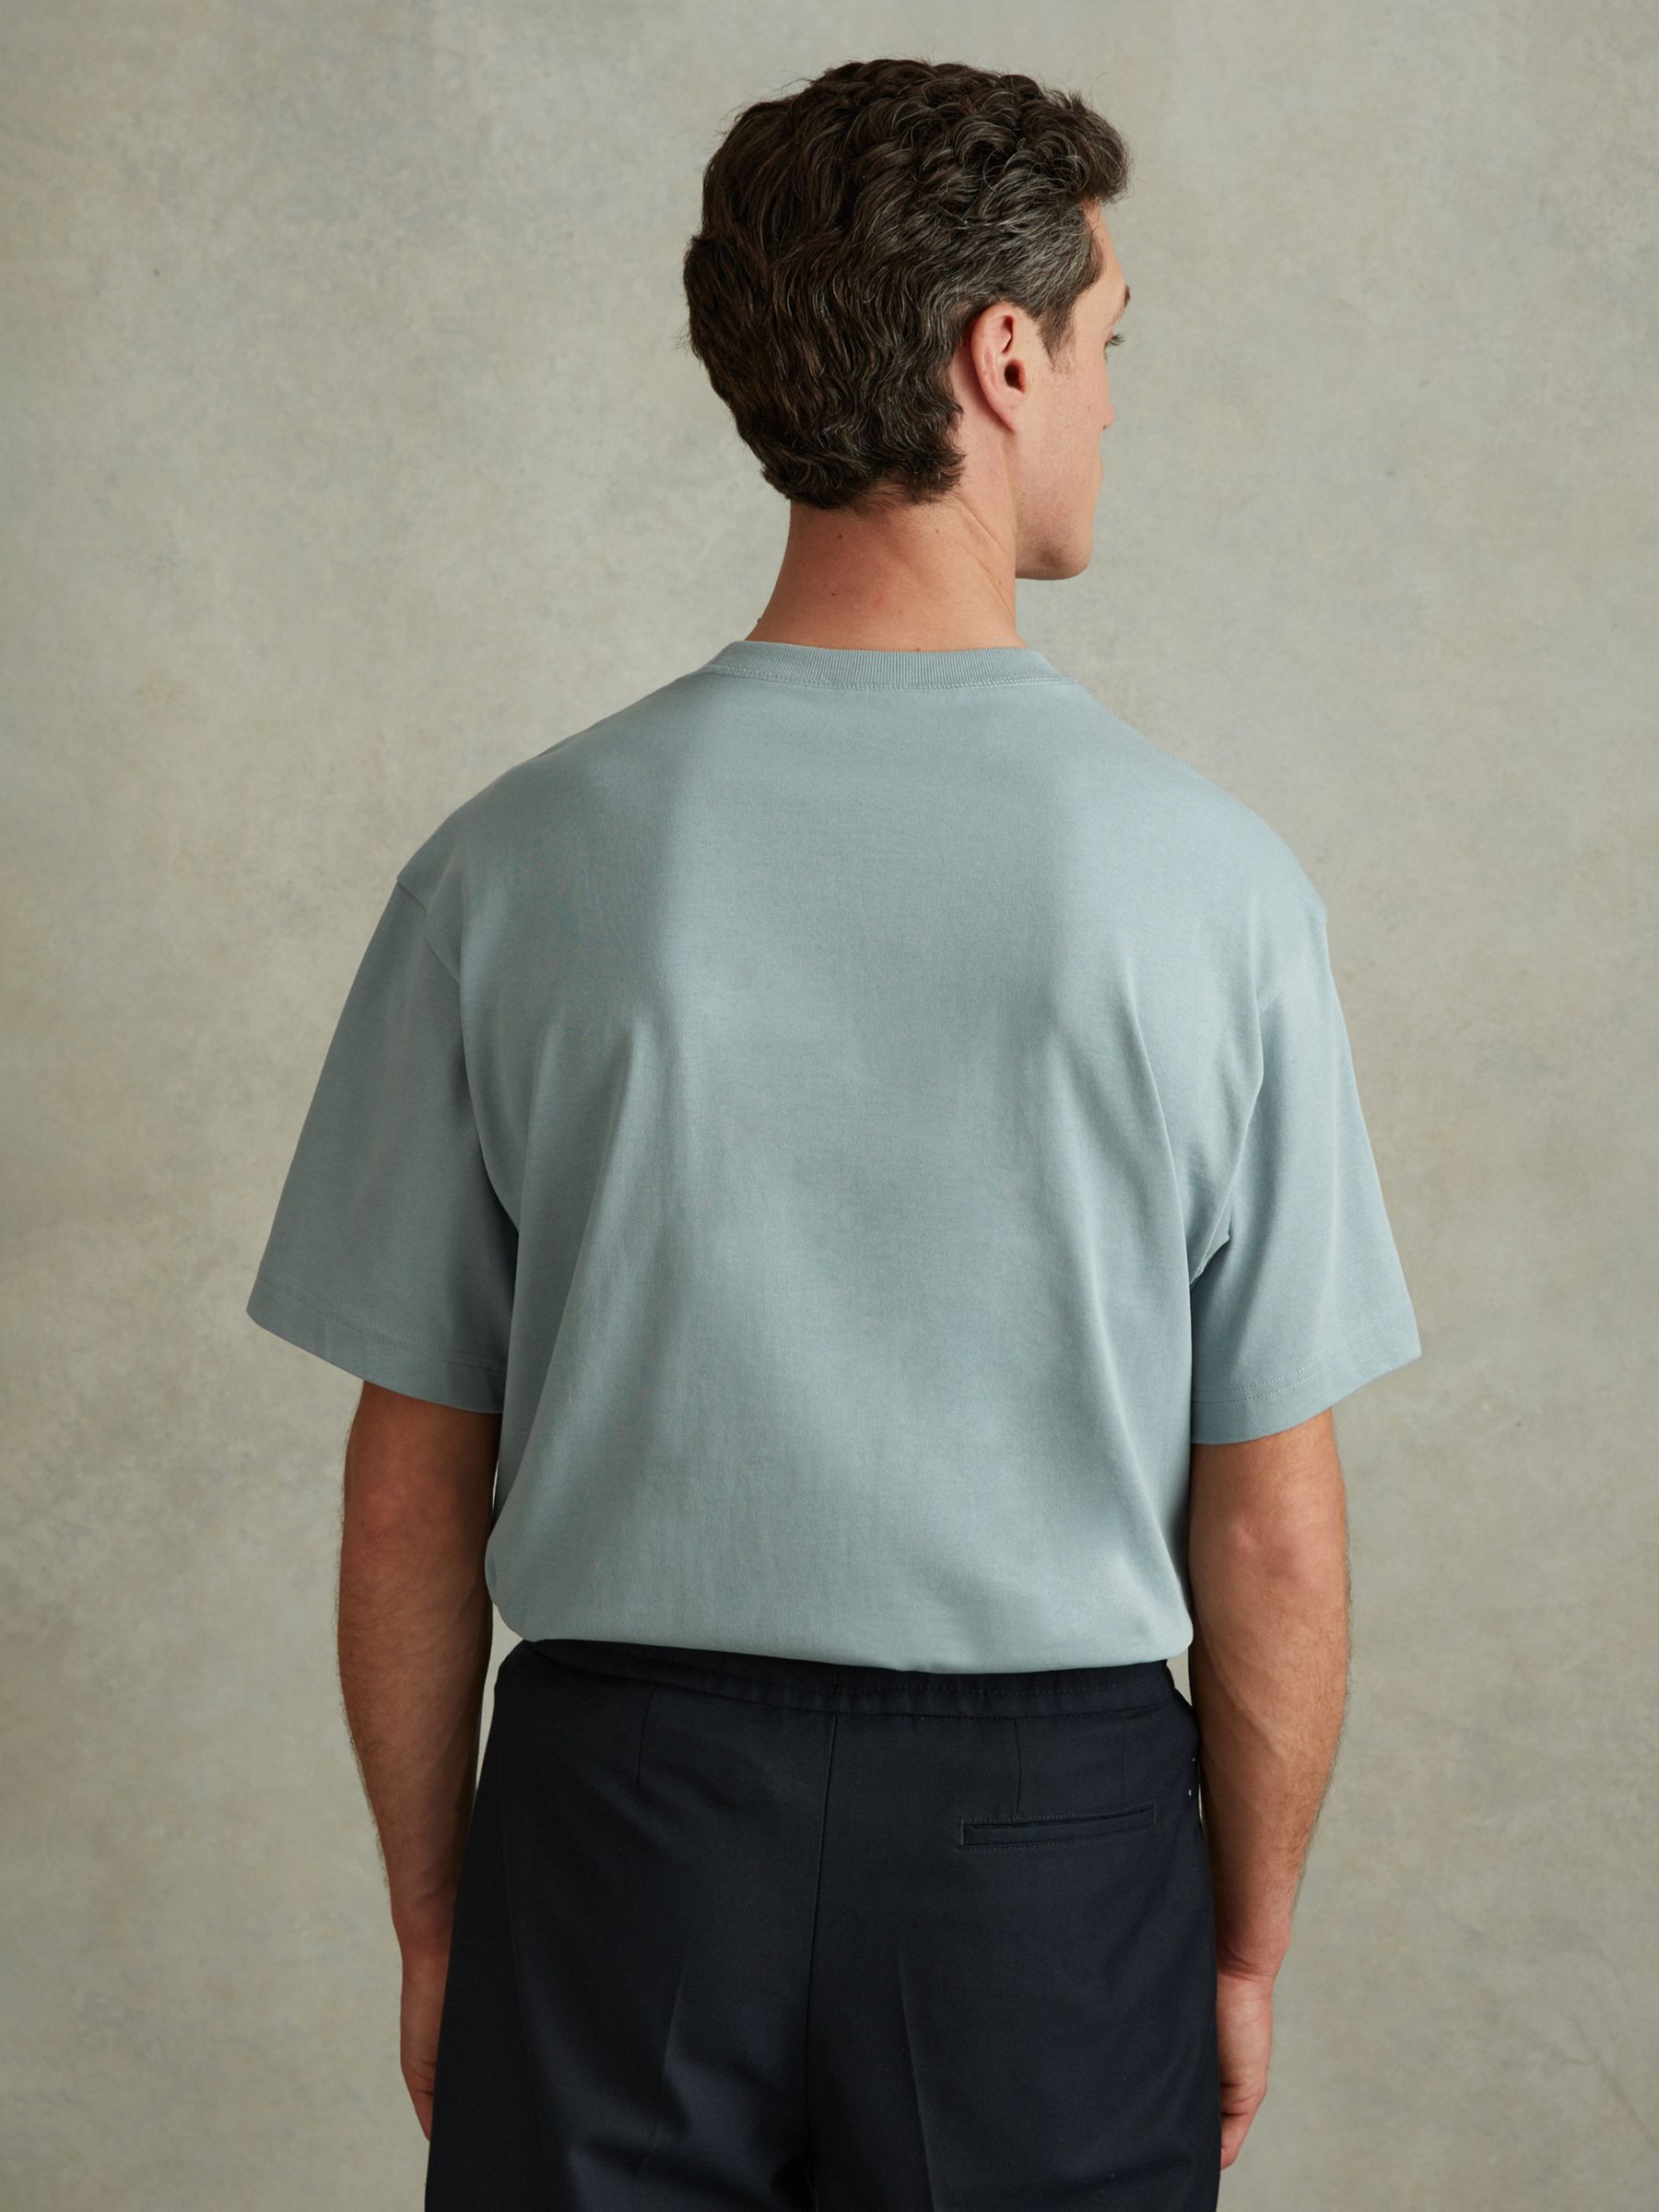 Reiss Tate Cotton Crew Neck T-Shirt, Faded Denim, XS